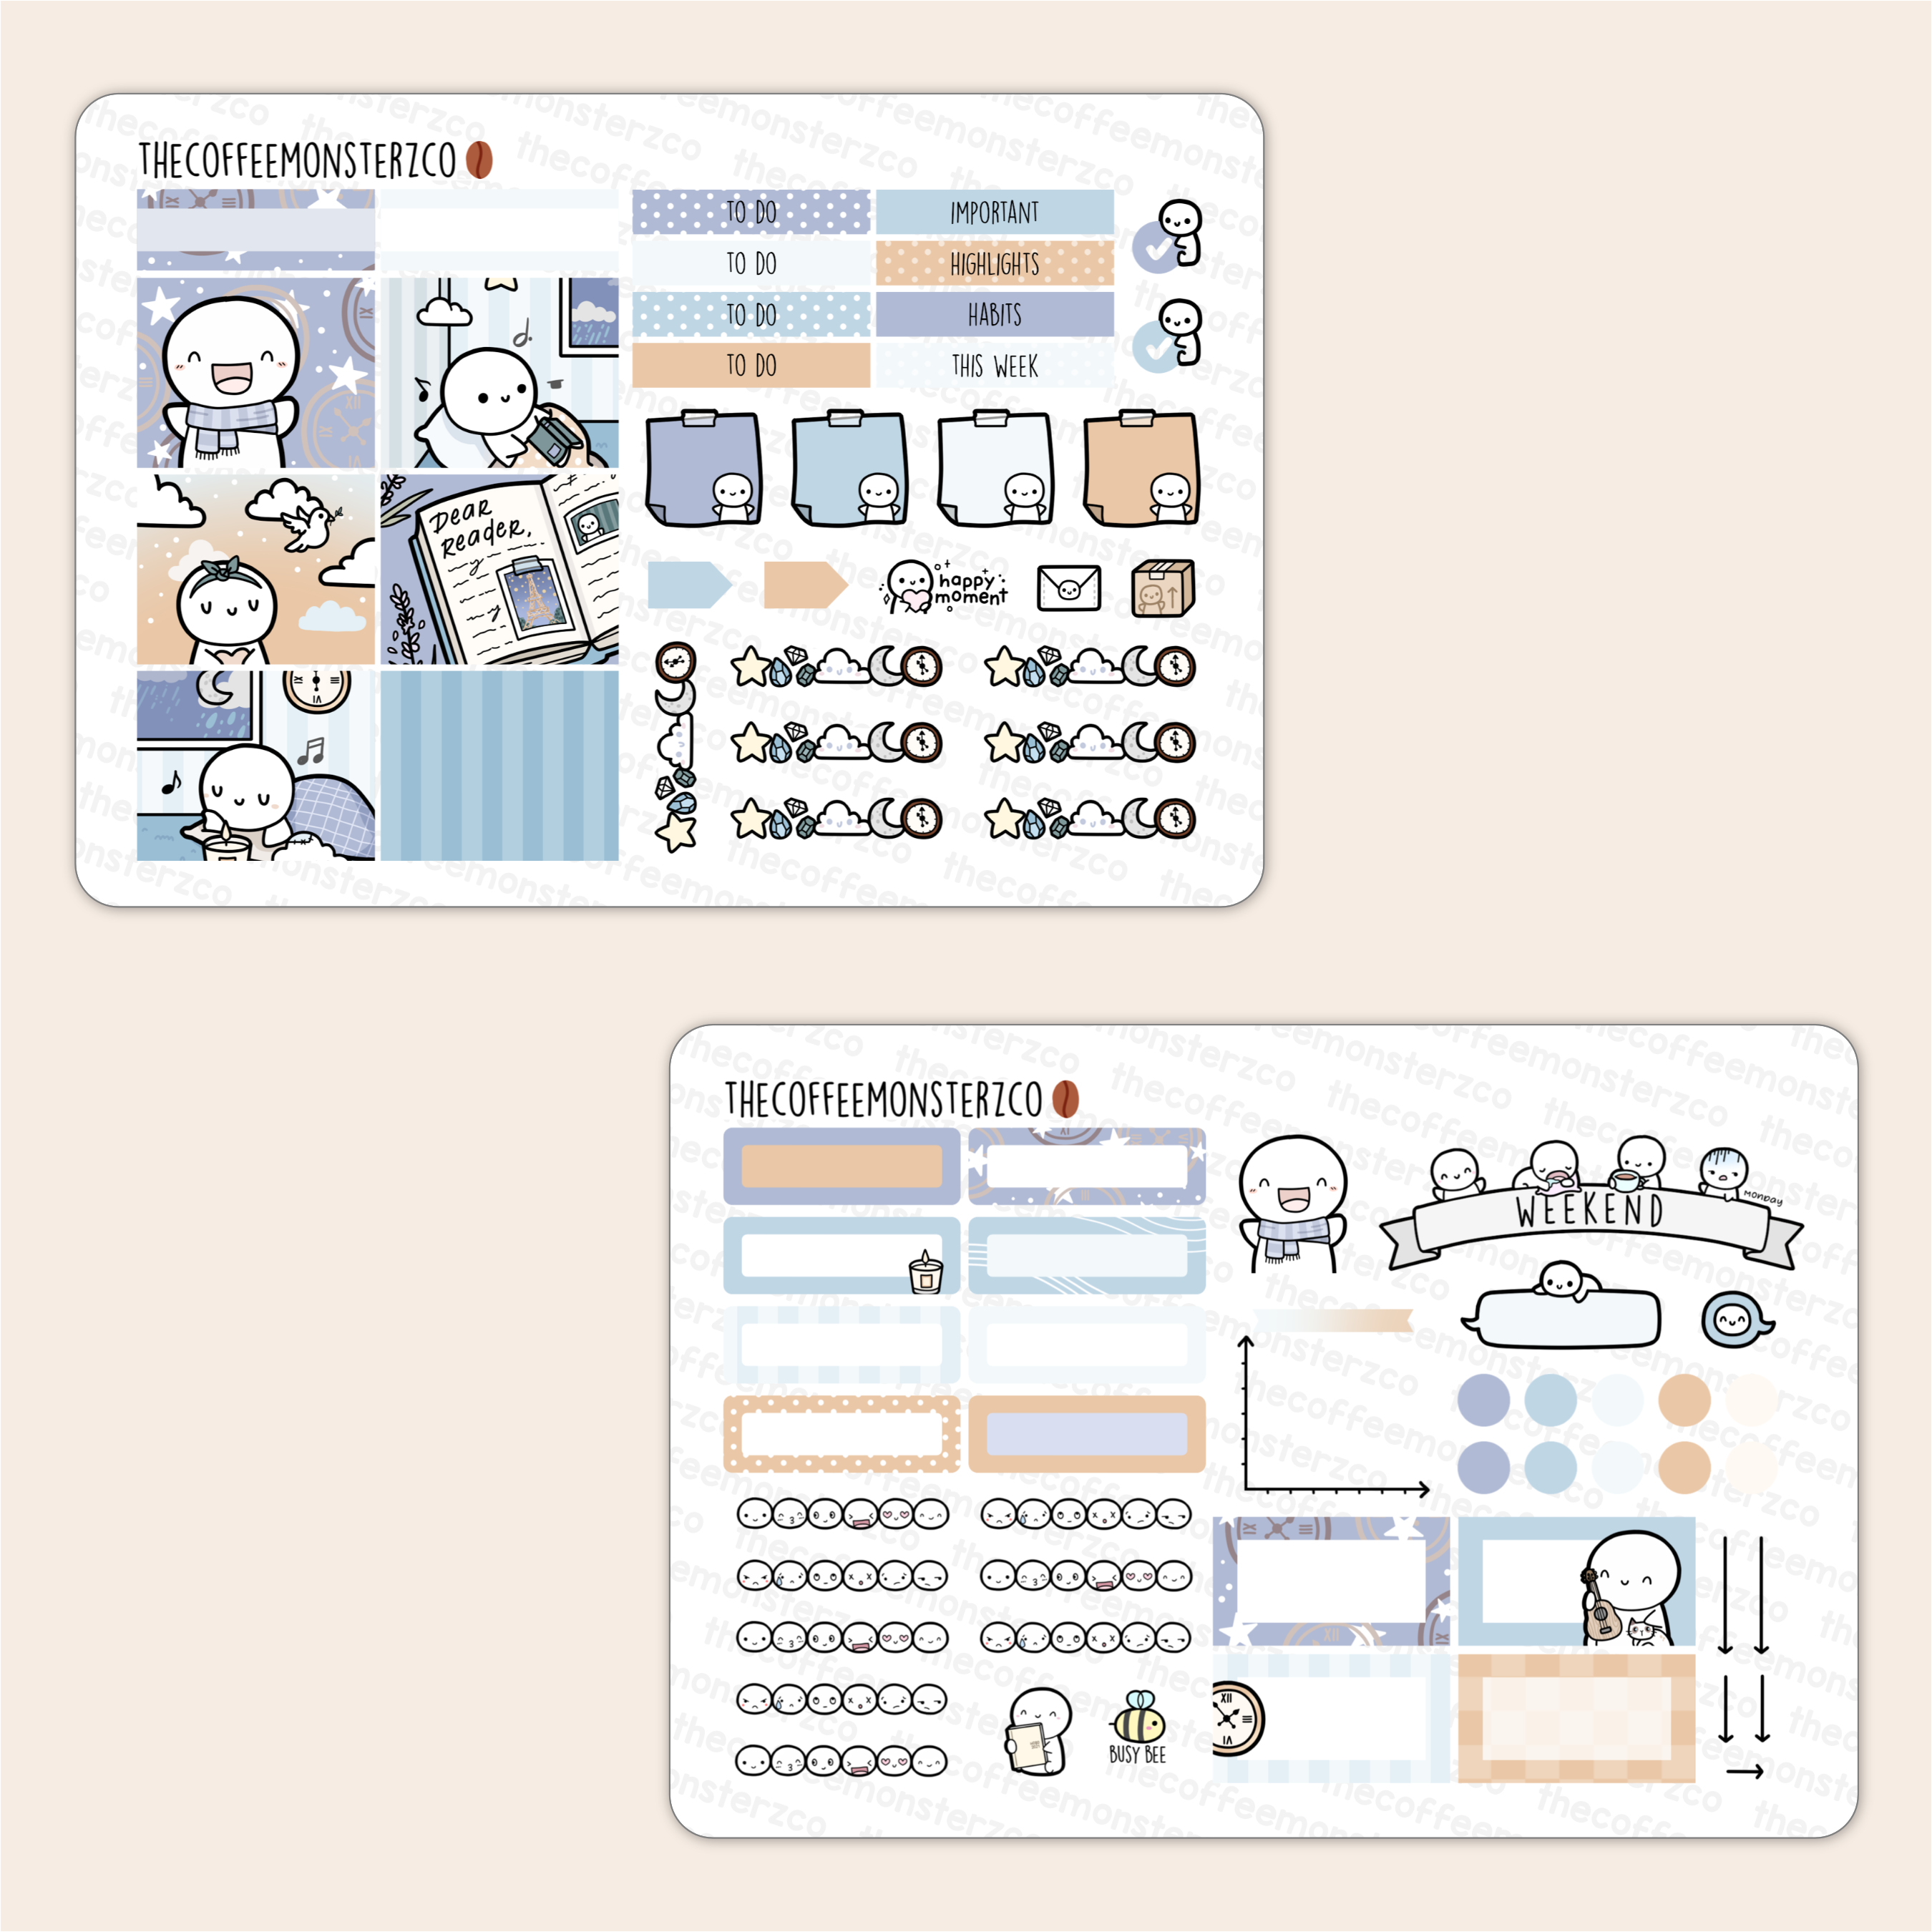 Mystic Night Hobonichi Cousin Kit Planner Stickers – Pinnacle Sticker Co